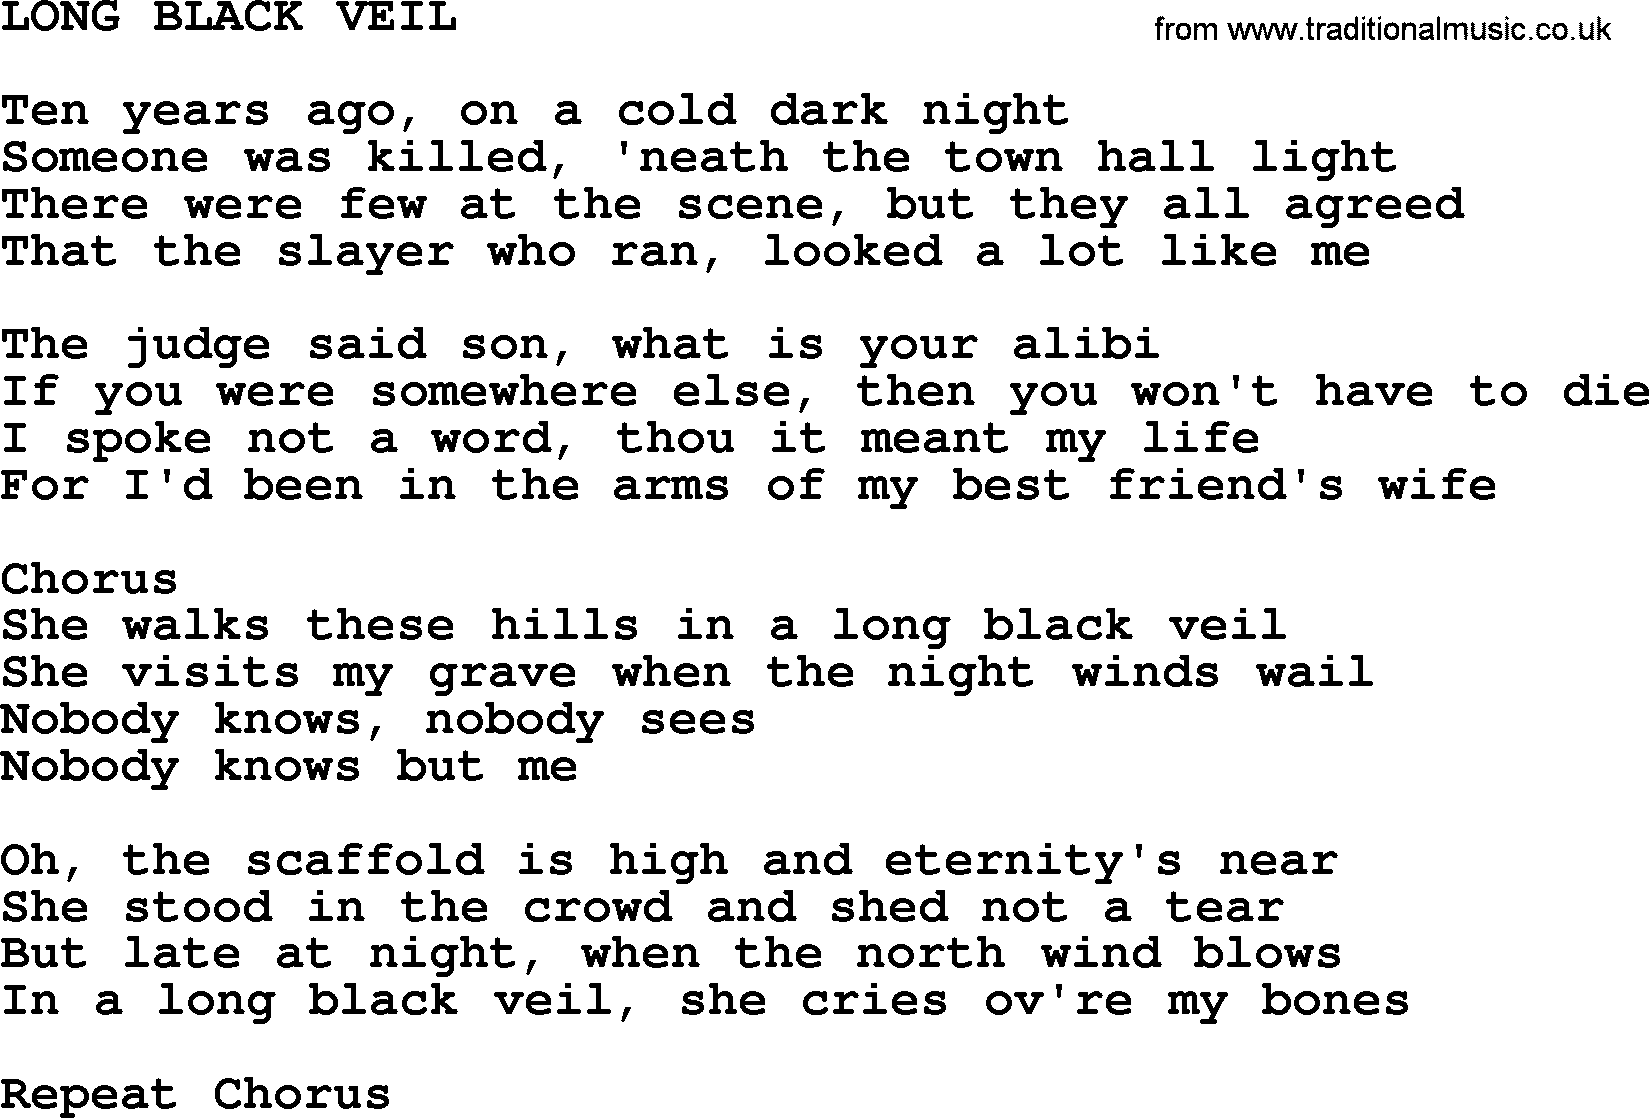 Johnny Cash song Long Black Veil.txt lyrics